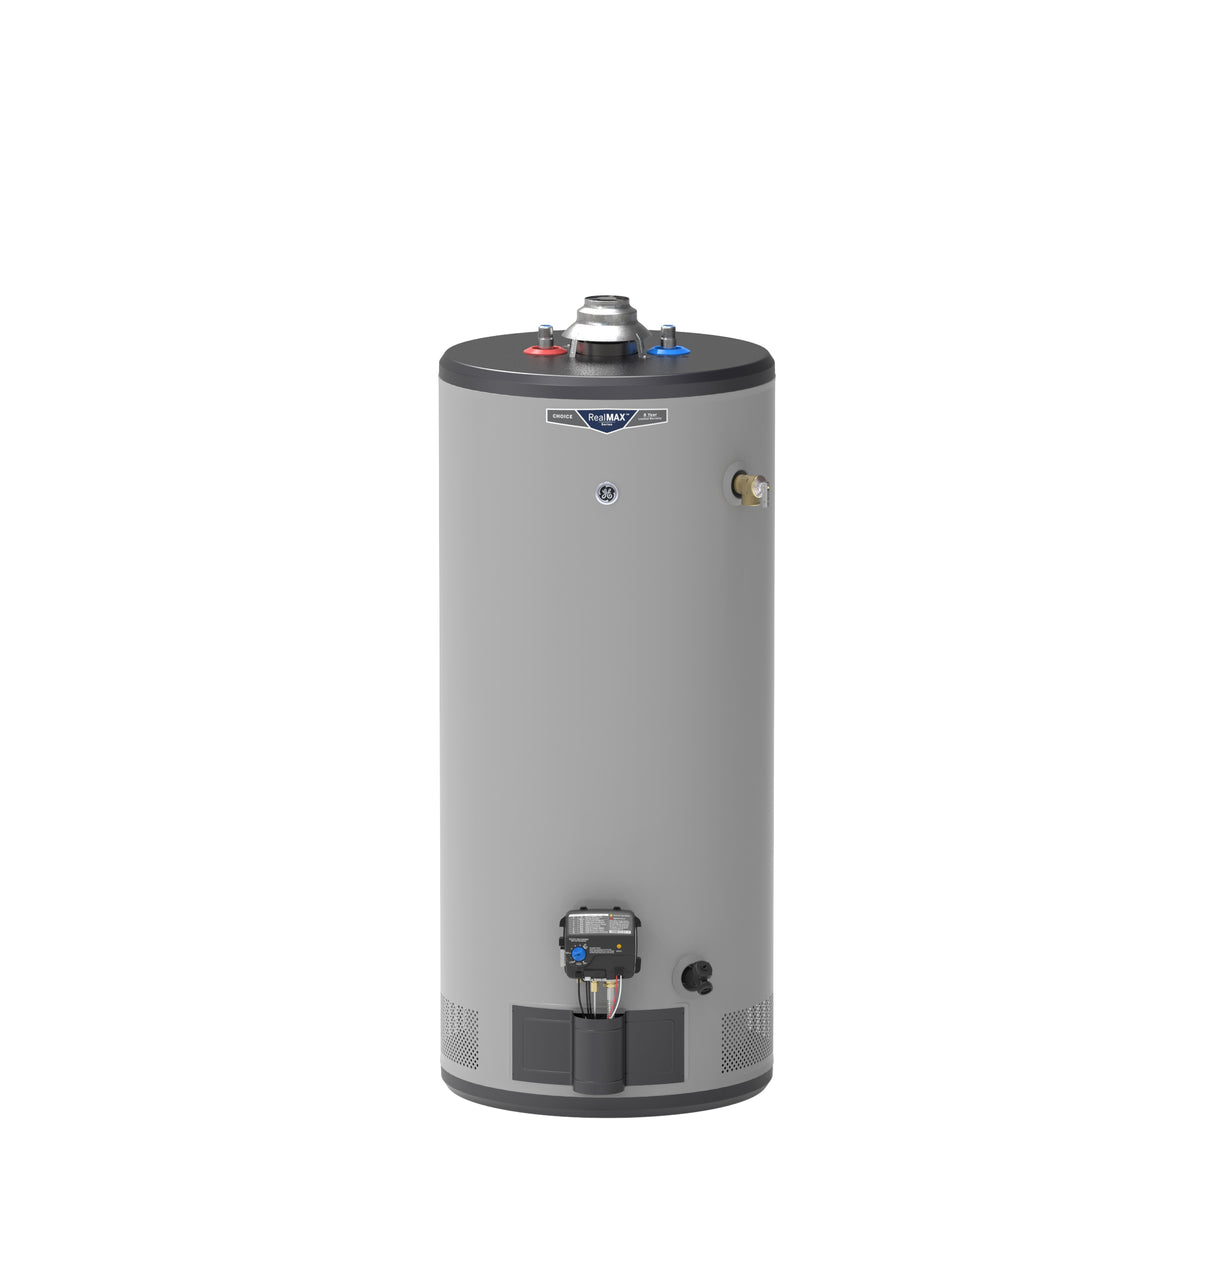 GE RealMAX Choice 40-Gallon Short Liquid Propane Atmospheric Water Heater - (GP40S08BXR)